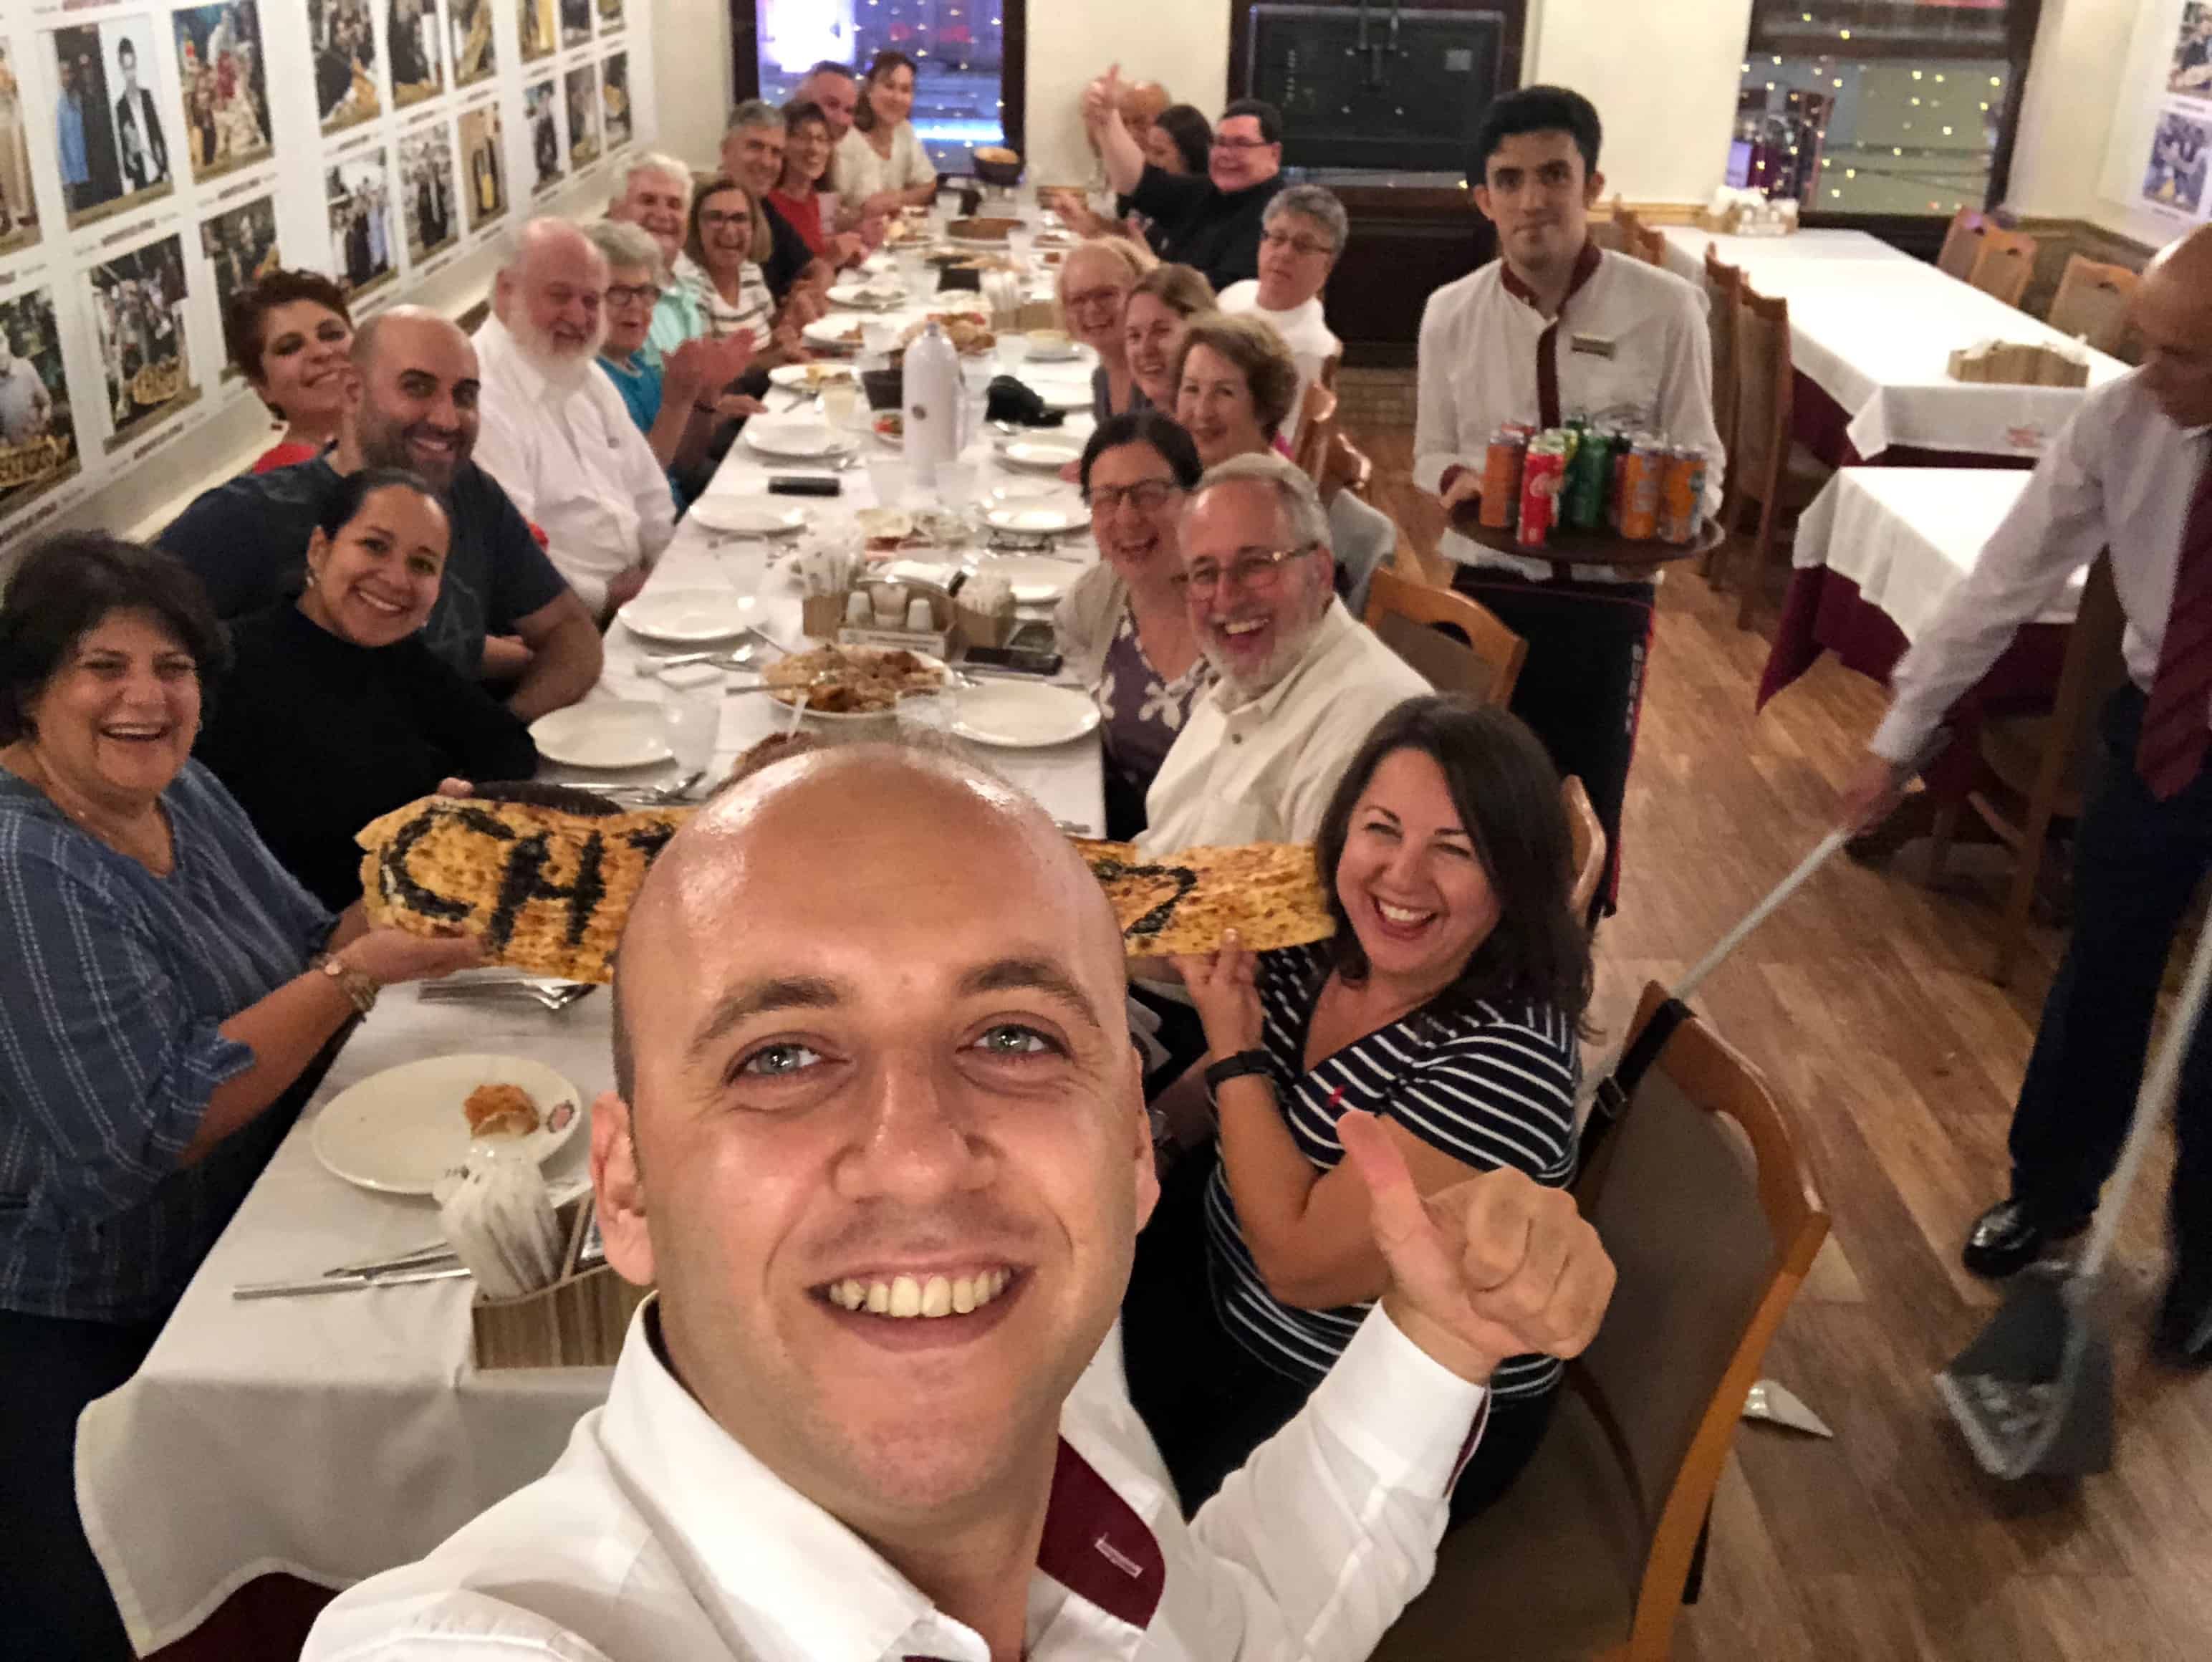 Waiter taking a selfie with the group at Hatay Medeniyetler Sofrası